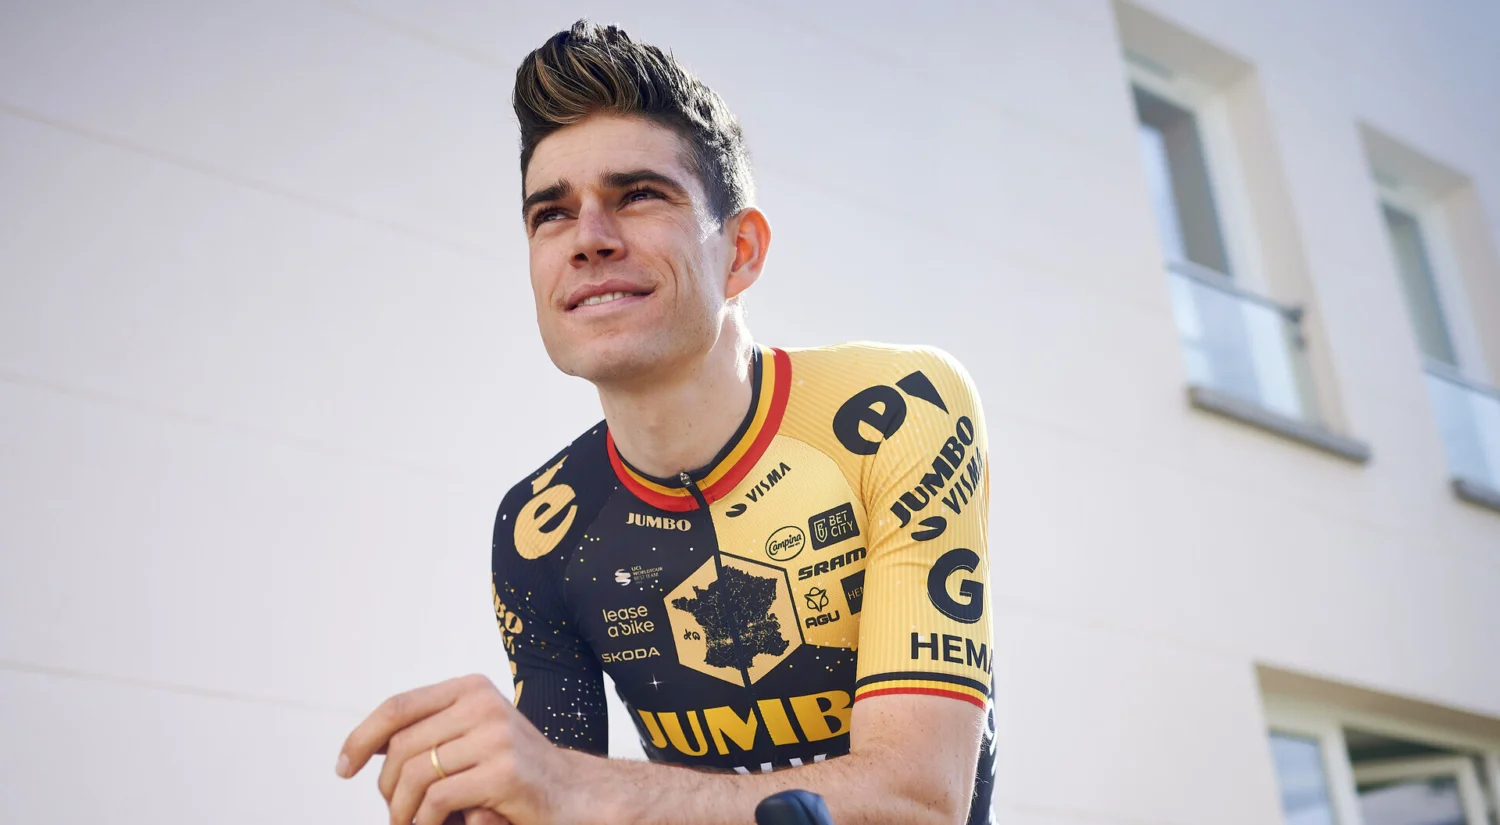 Jumbo-Visma reveal 'sky full of dreams' jersey for Tour de France